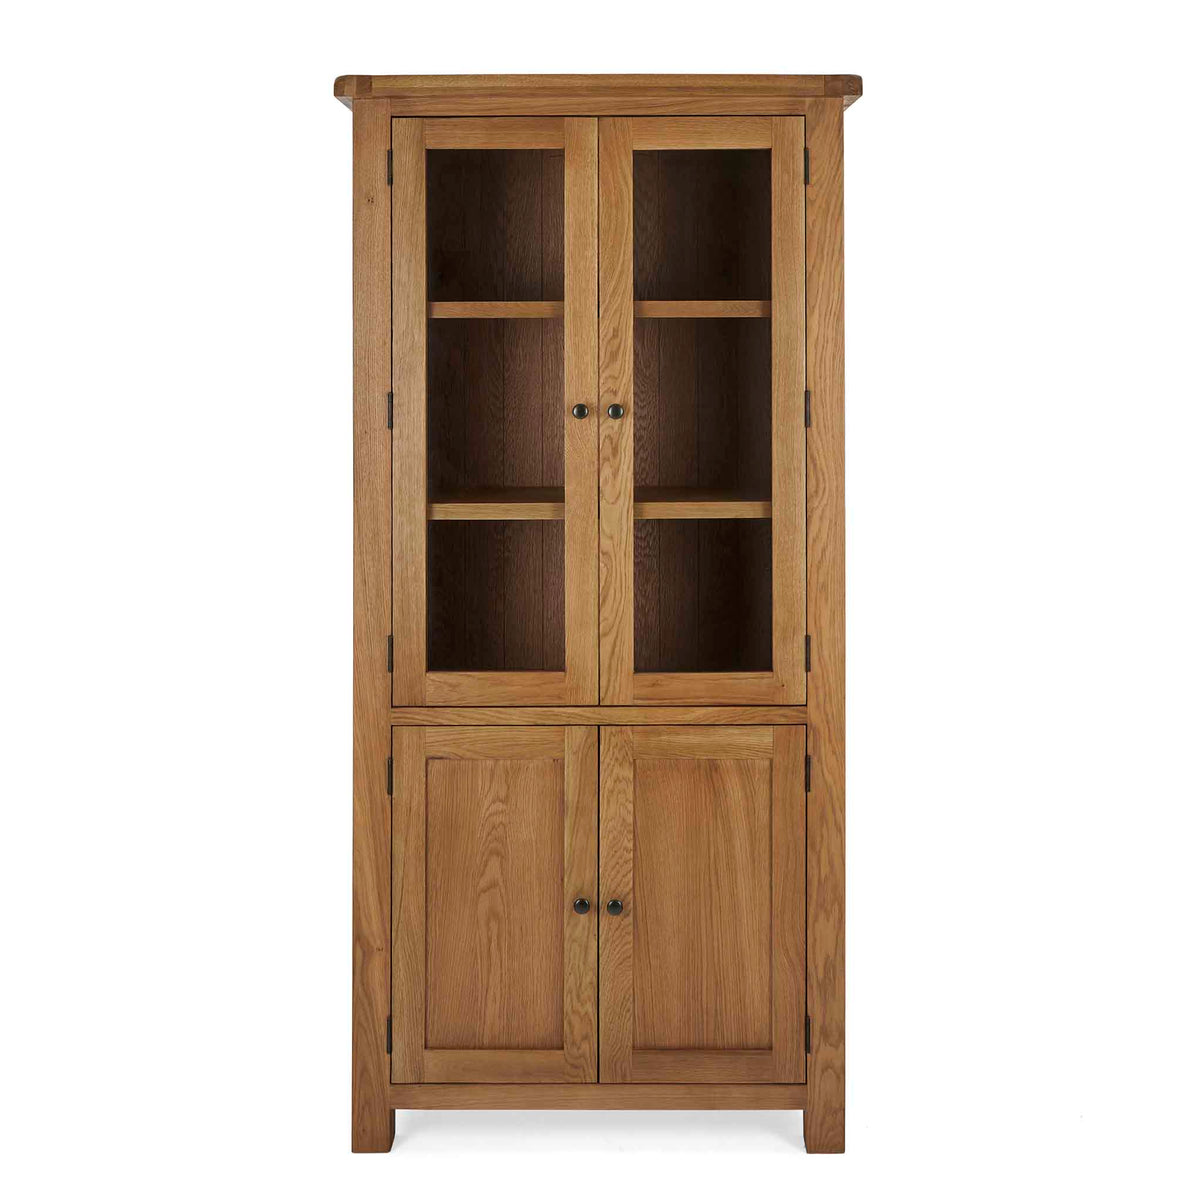 Zelah Oak Display Cabinet - Front view